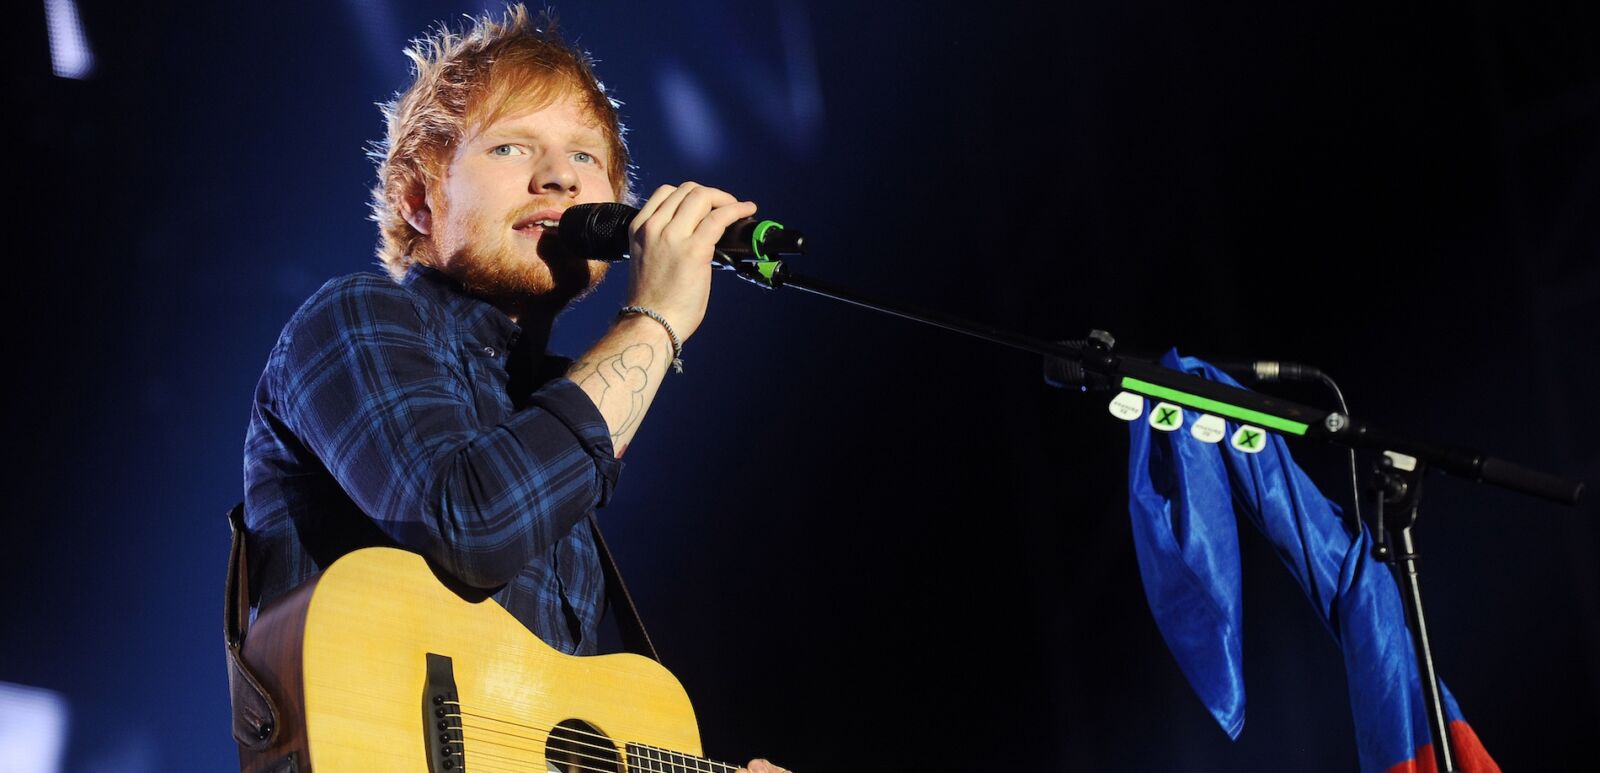 British singer Ed Sheeran performs live